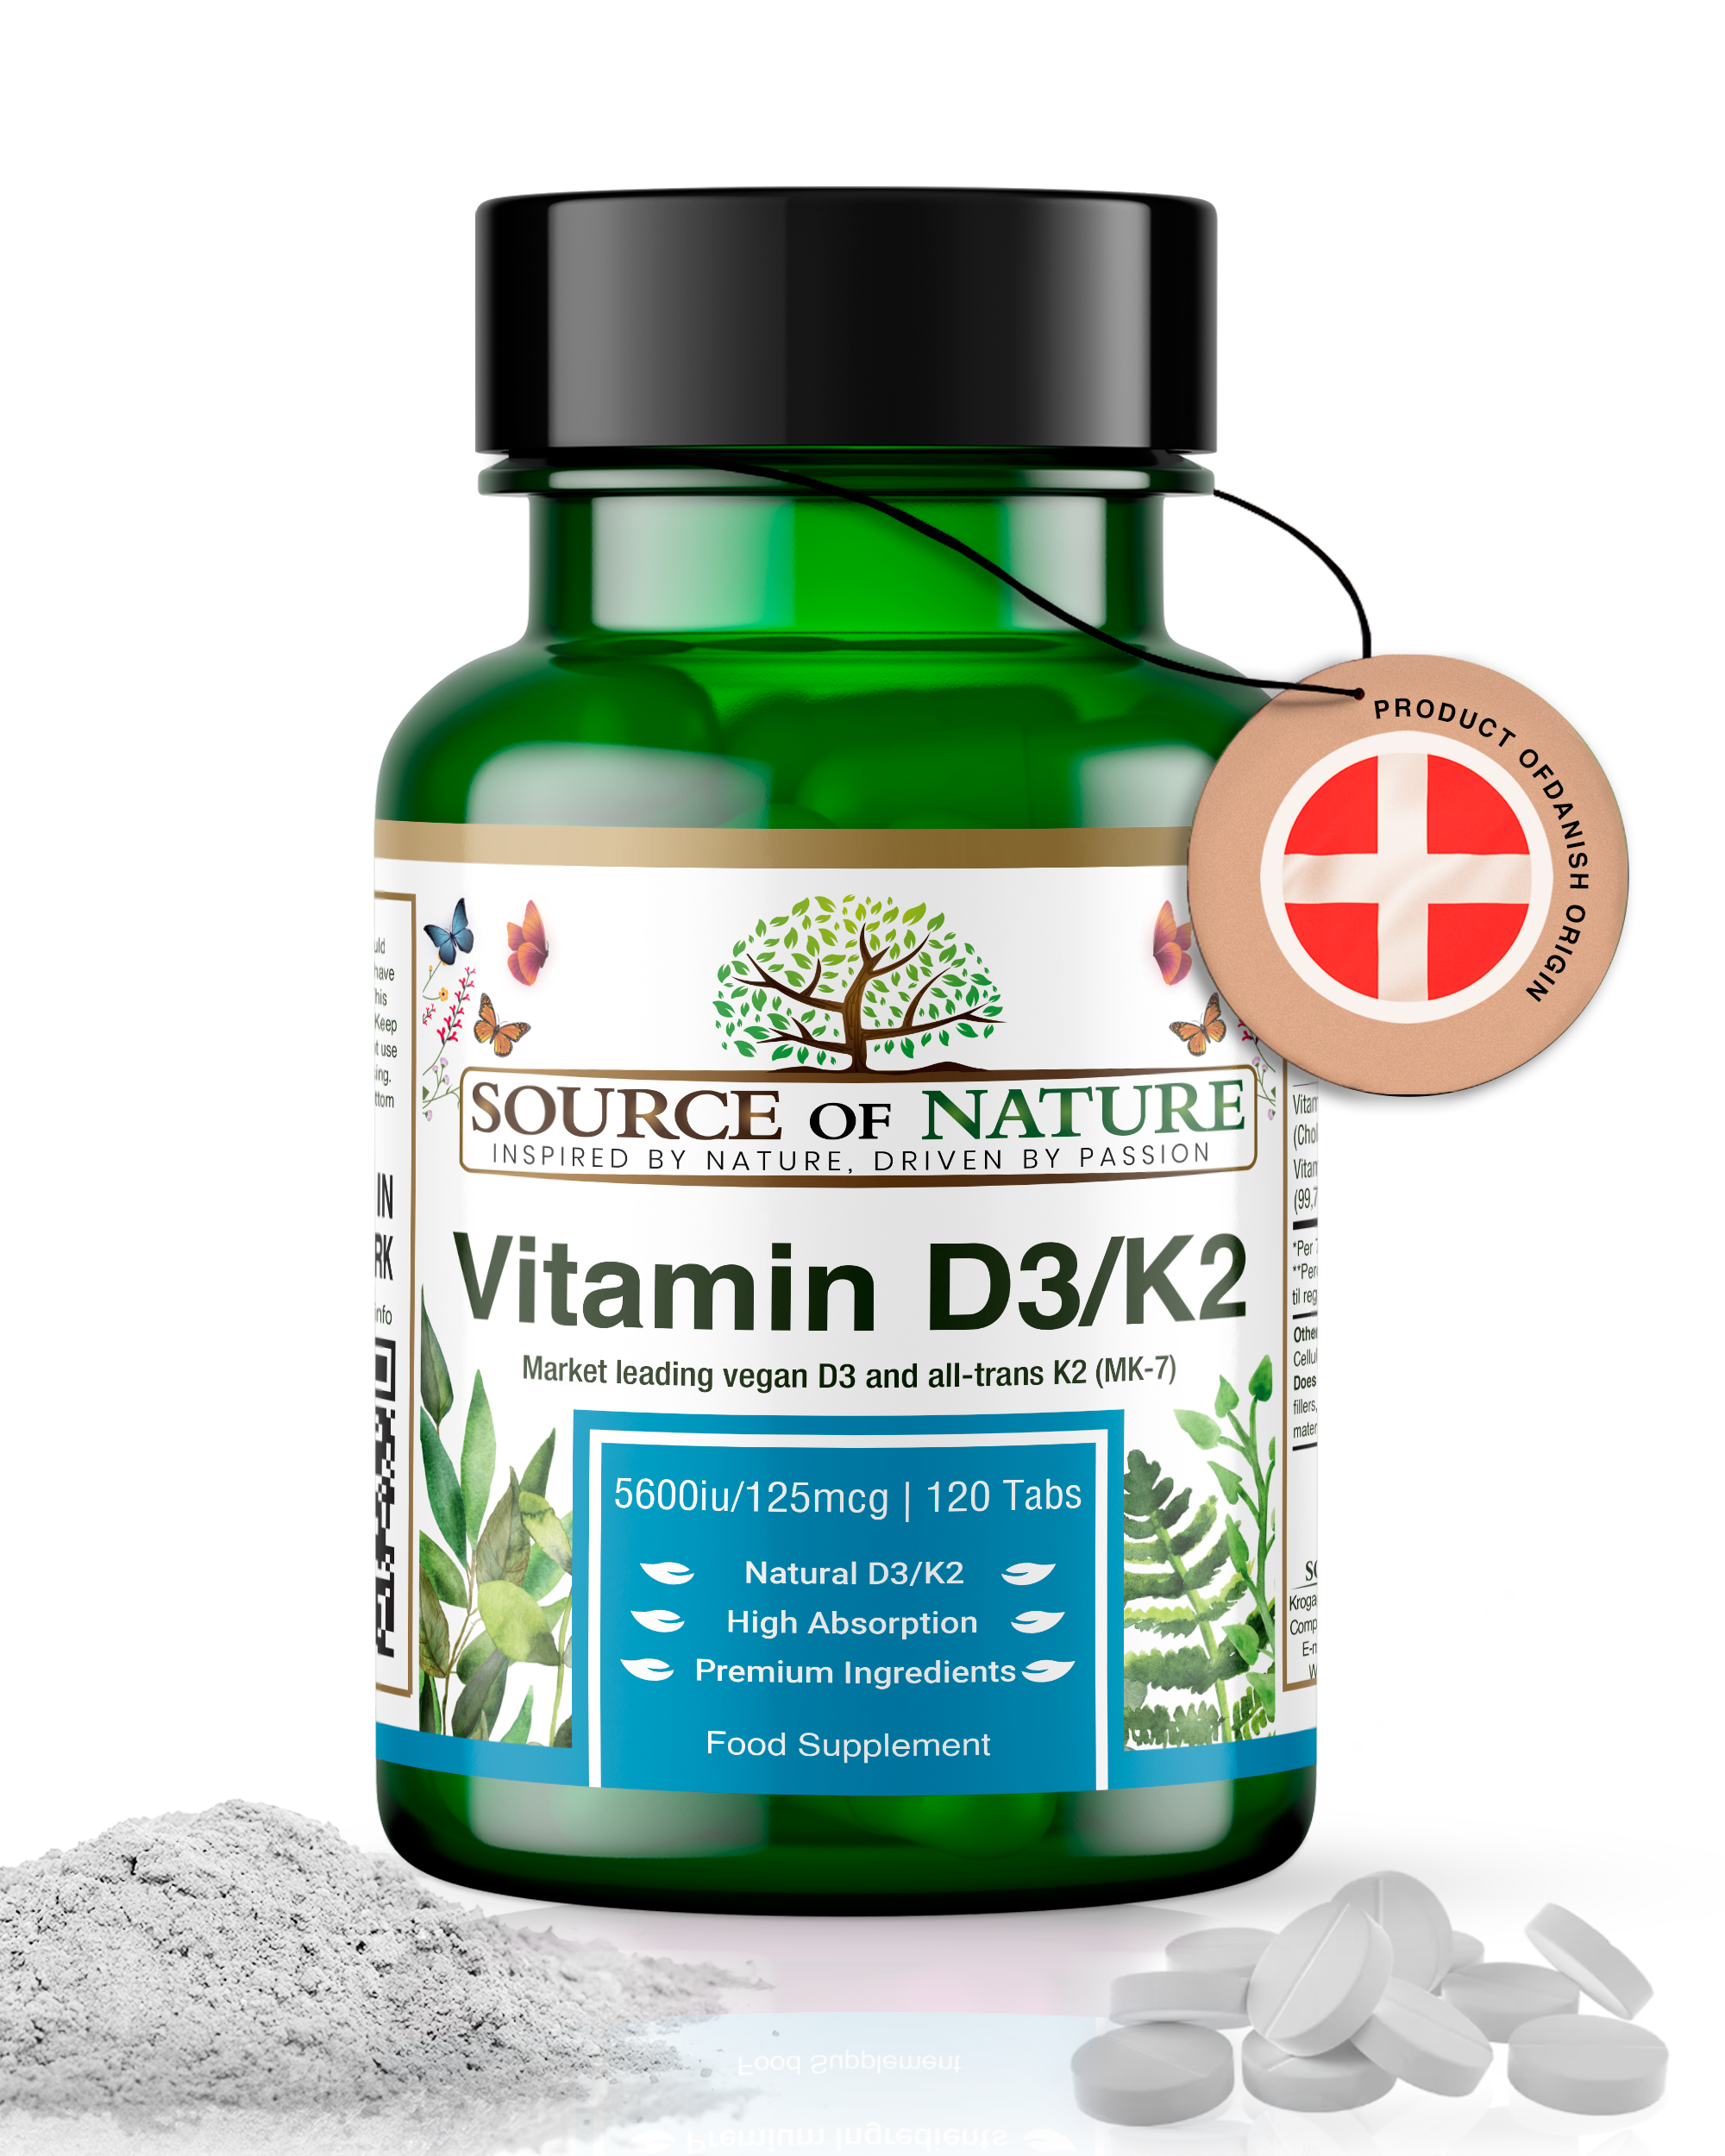 Vitamine D3 + K2 | 5500iu D3 + 125mcg K2 | 120 Comprimés | Approvisionnement de 2 ans